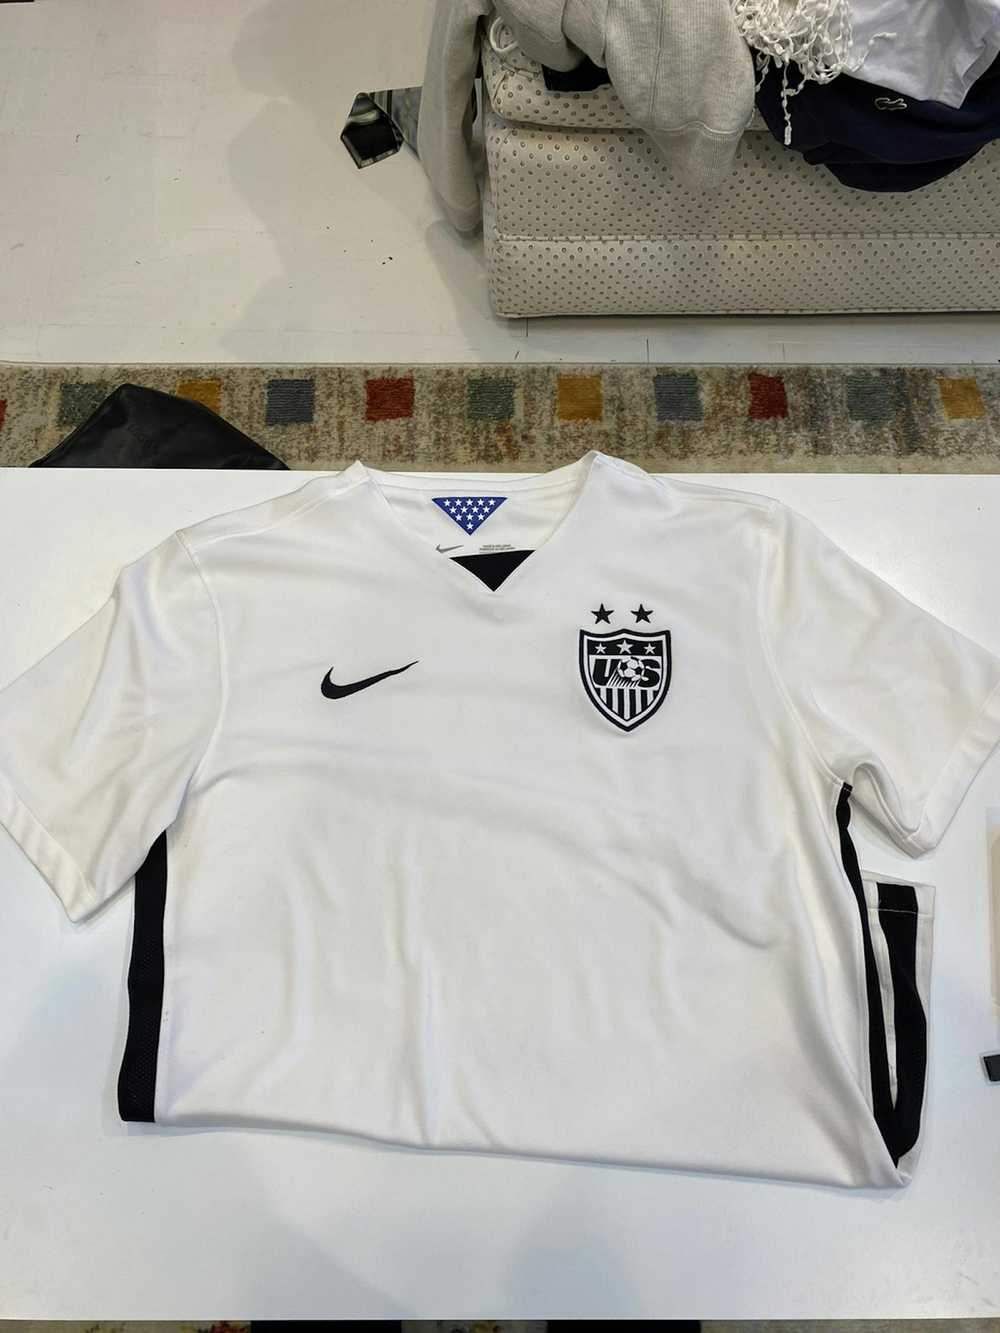 Nike 2015 USA soccer jersey - image 1